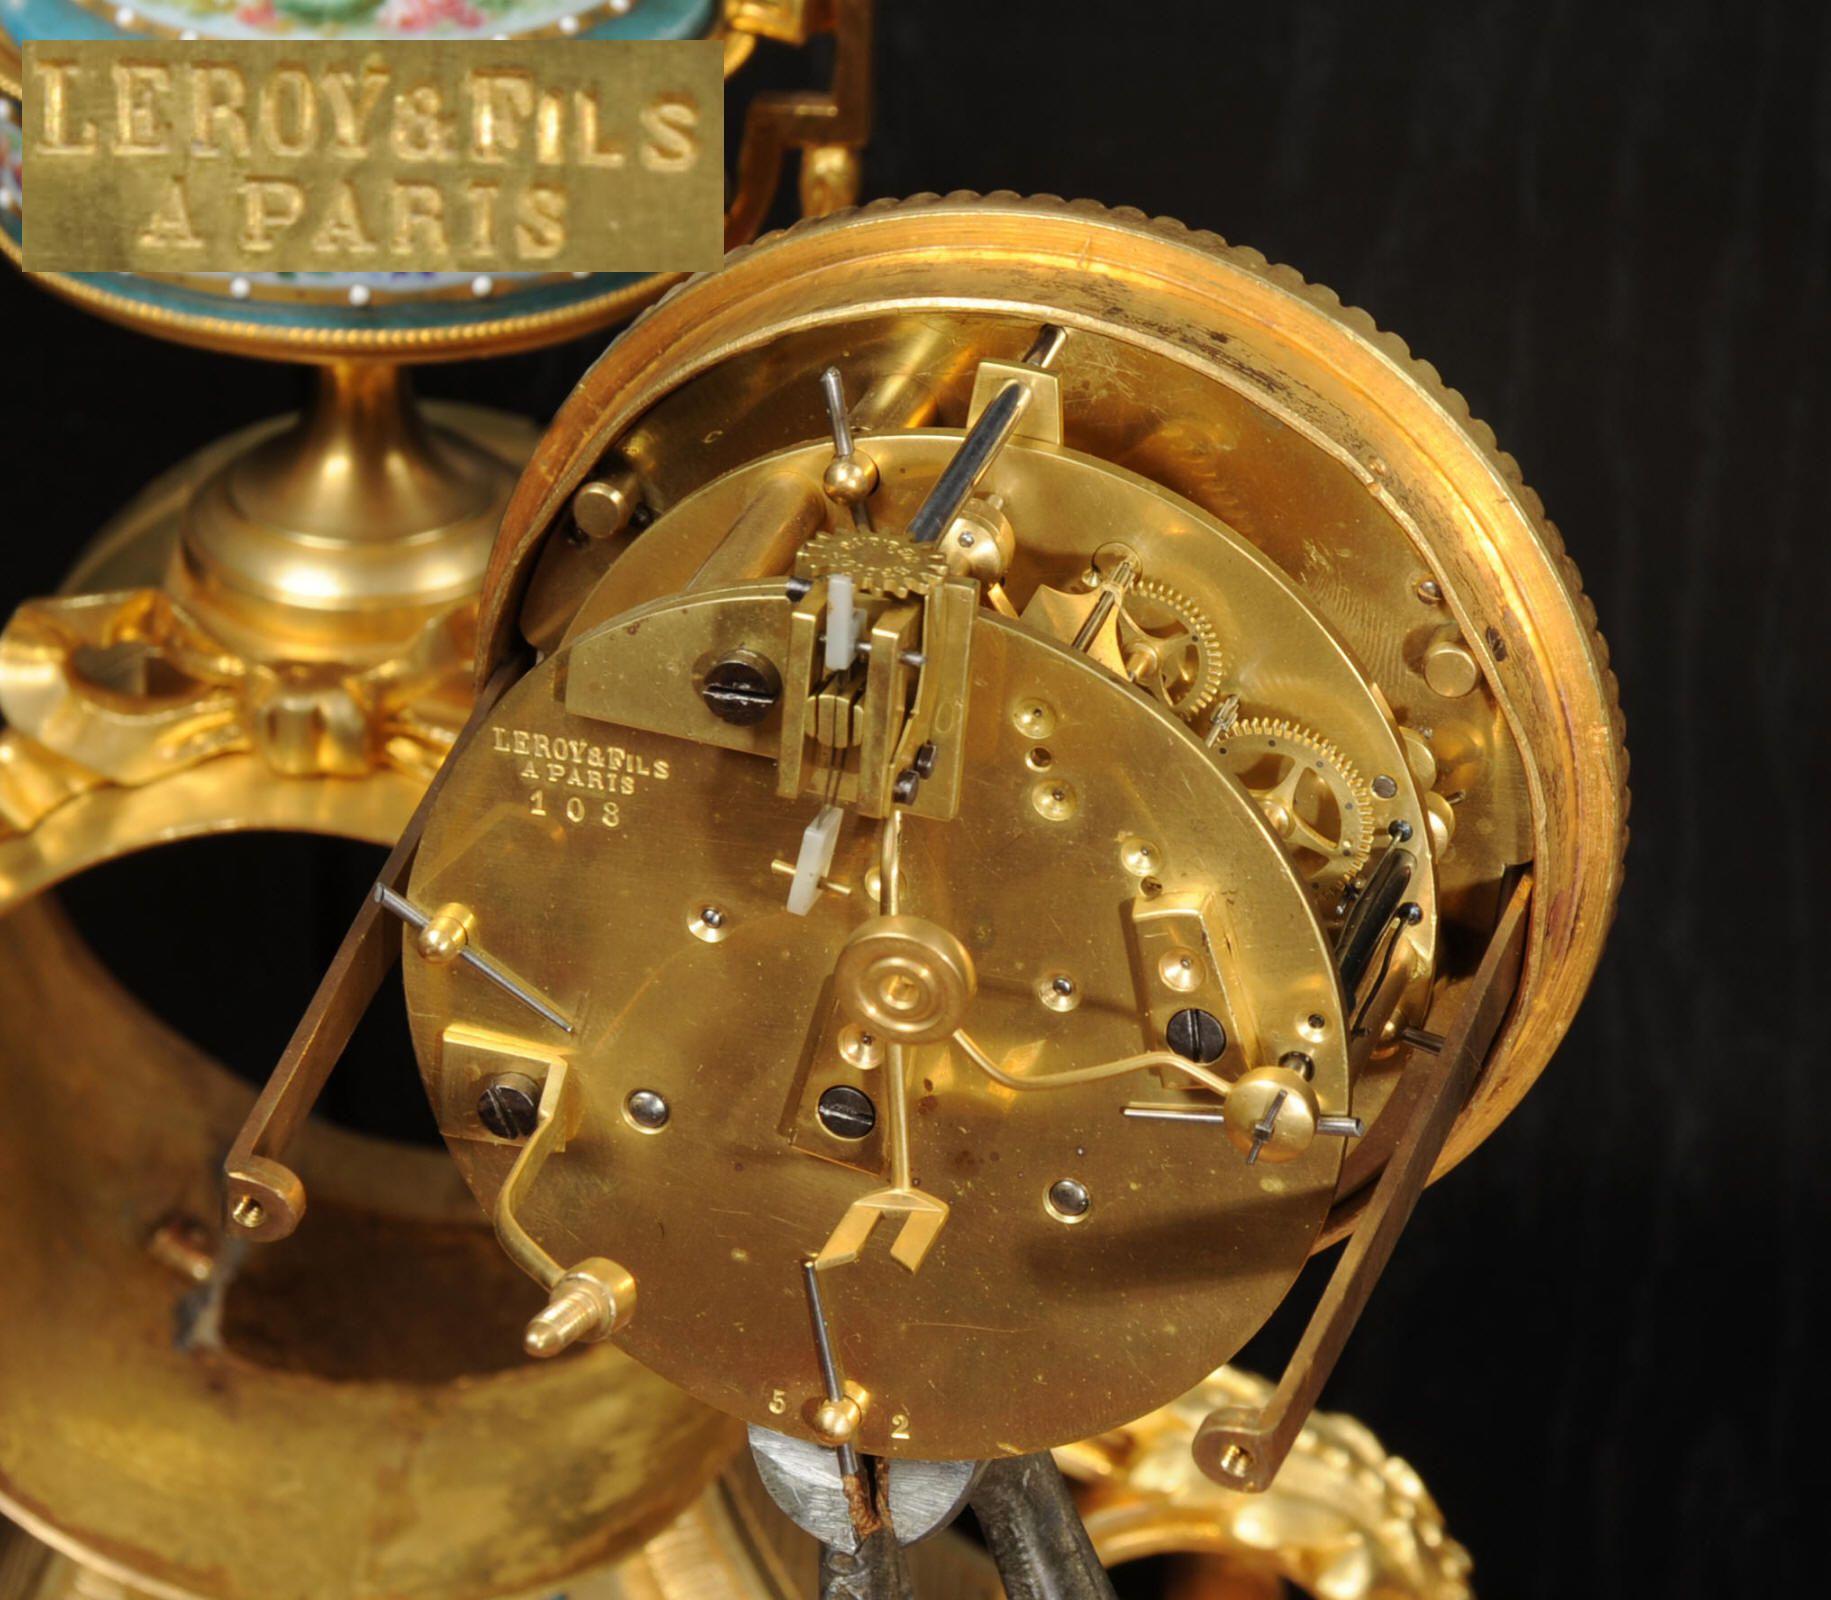 Ormolu and Sevres Porcelain Antique French Clock by Le Roy et Fils 13